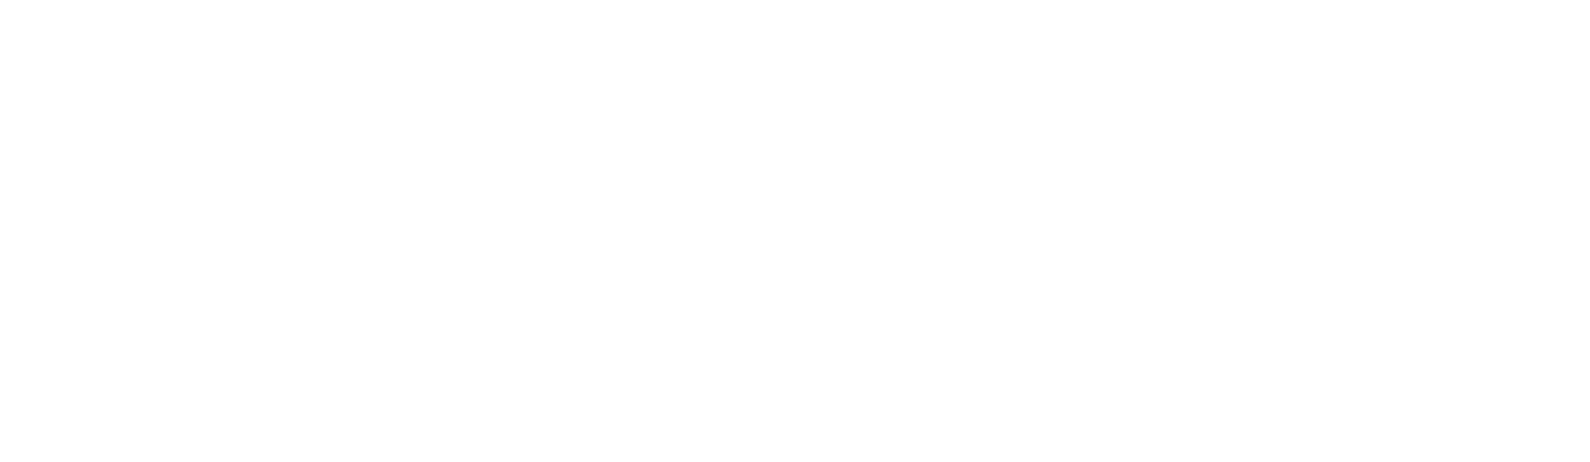 Jushi Holdings logo grand pour les fonds sombres (PNG transparent)